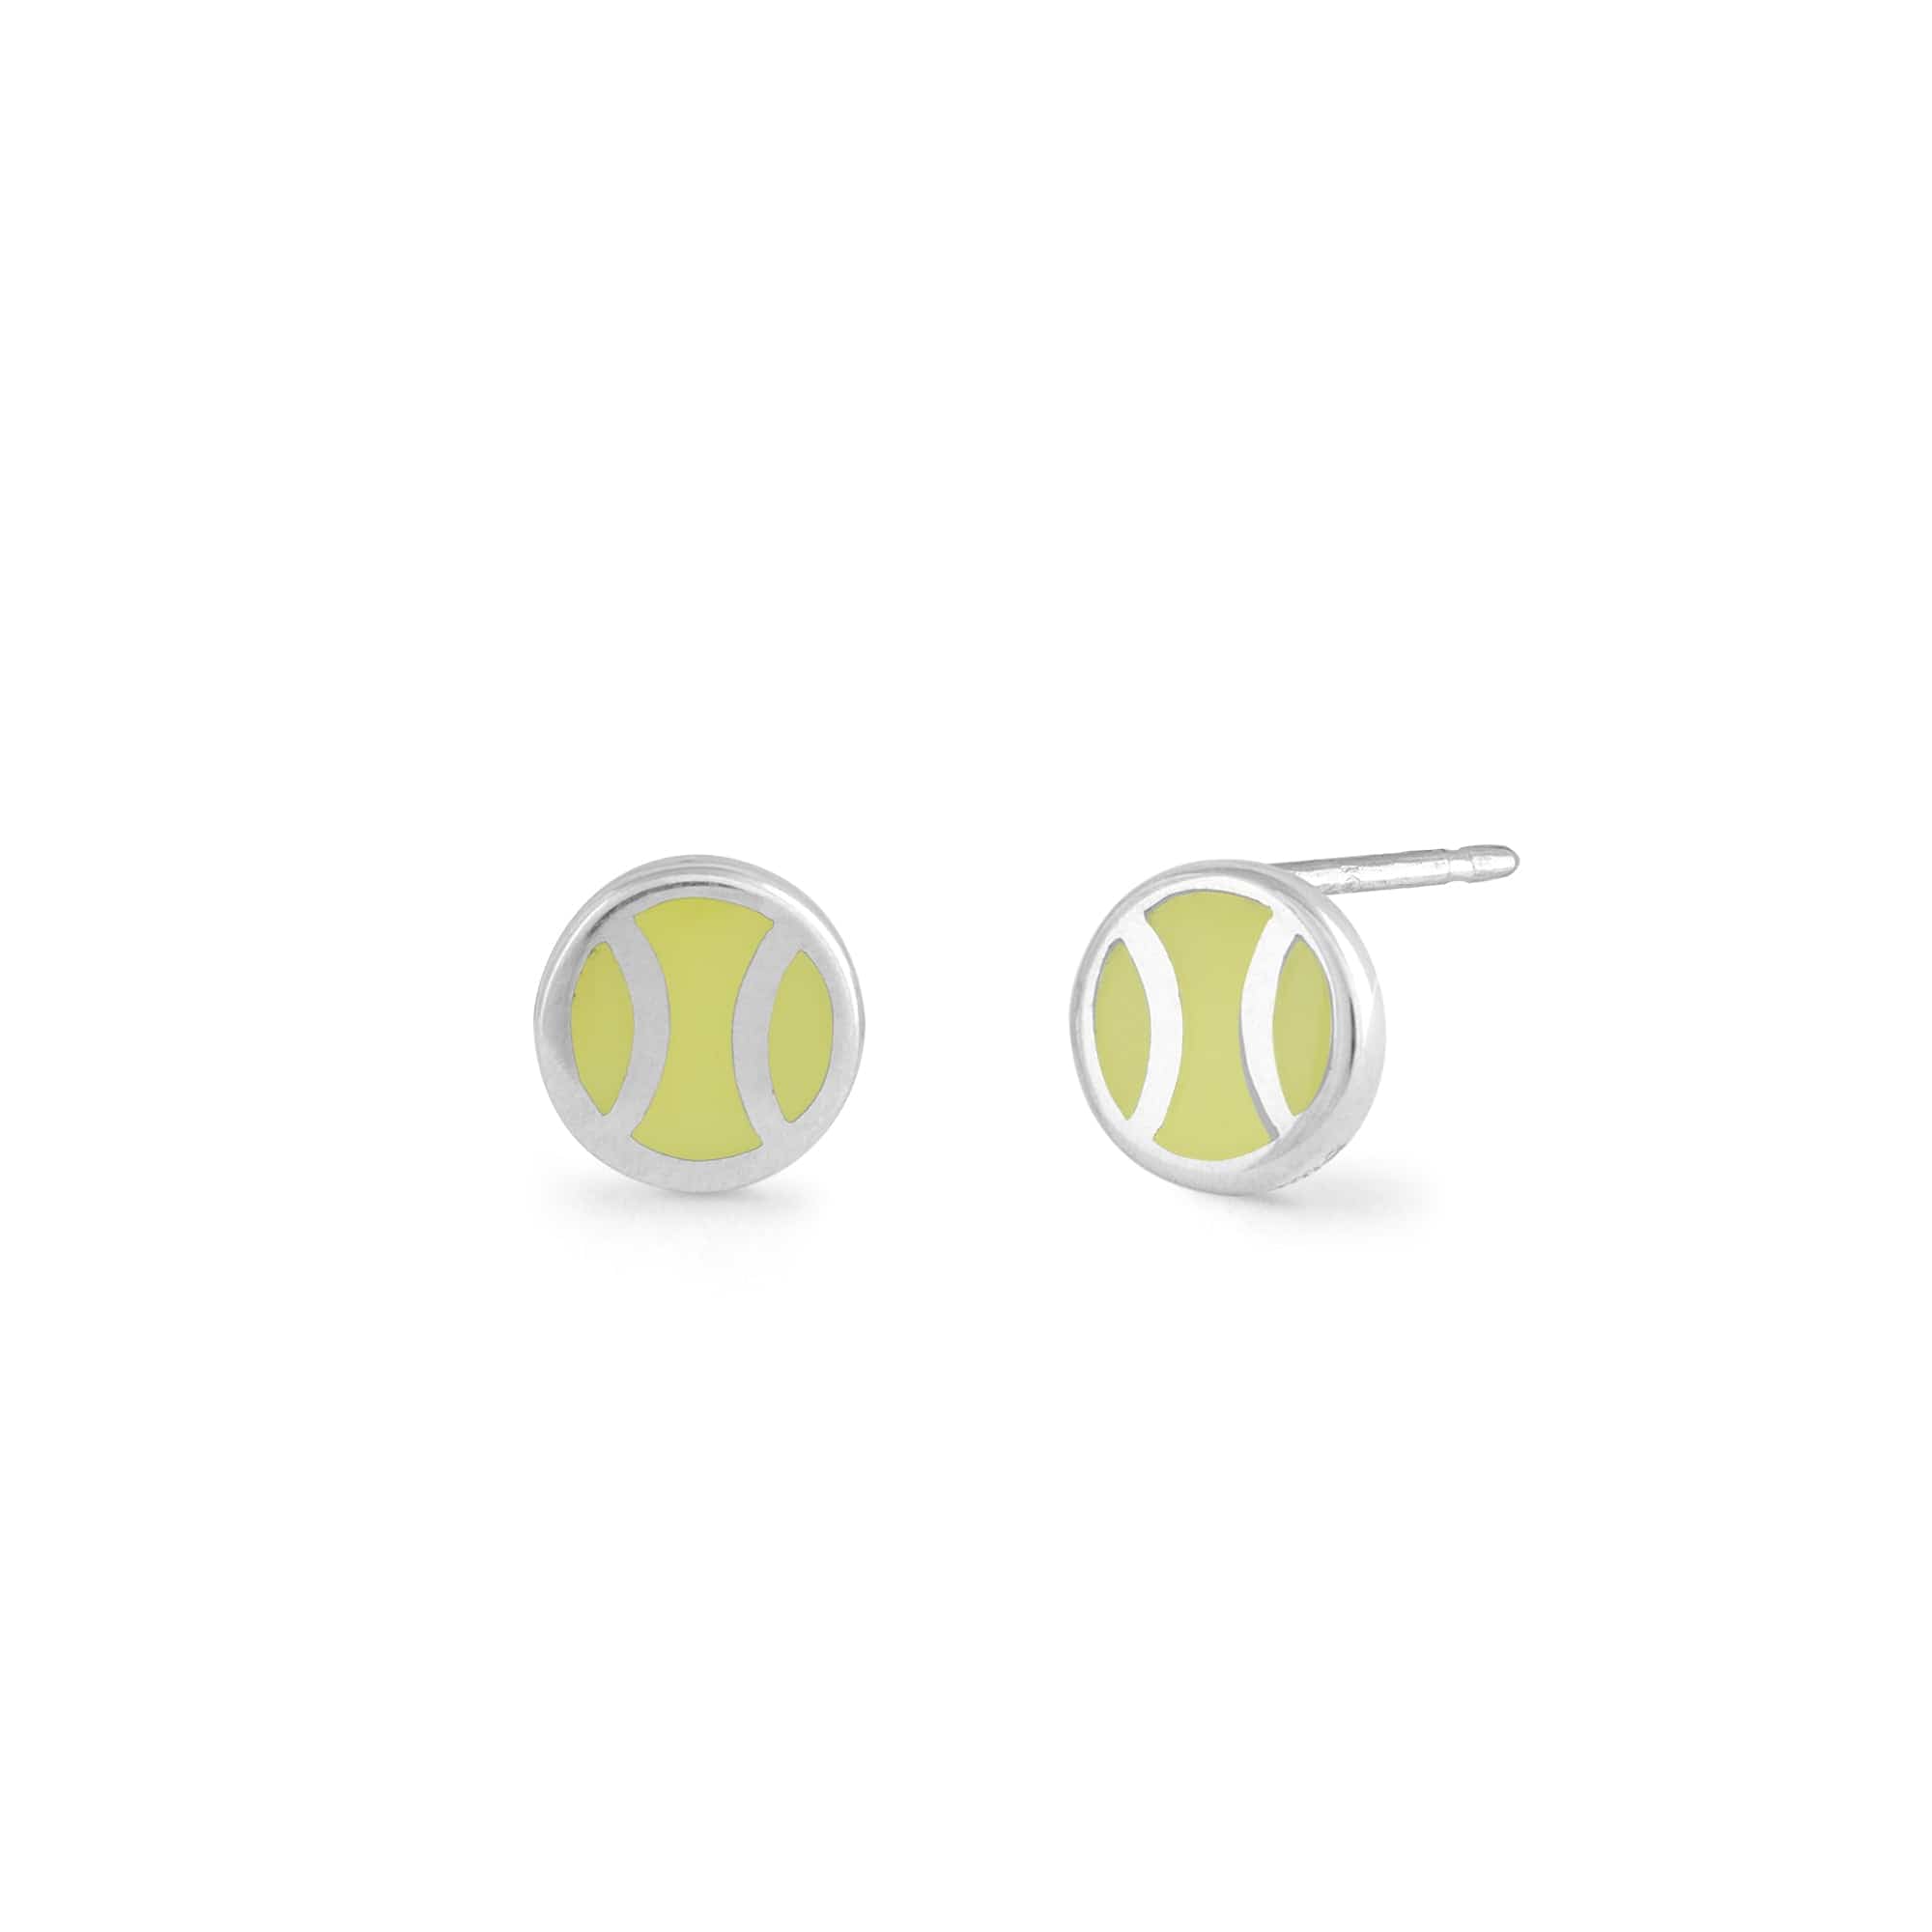 Boma Jewelry Earrings Neon Yellow Tennis Ball Studs